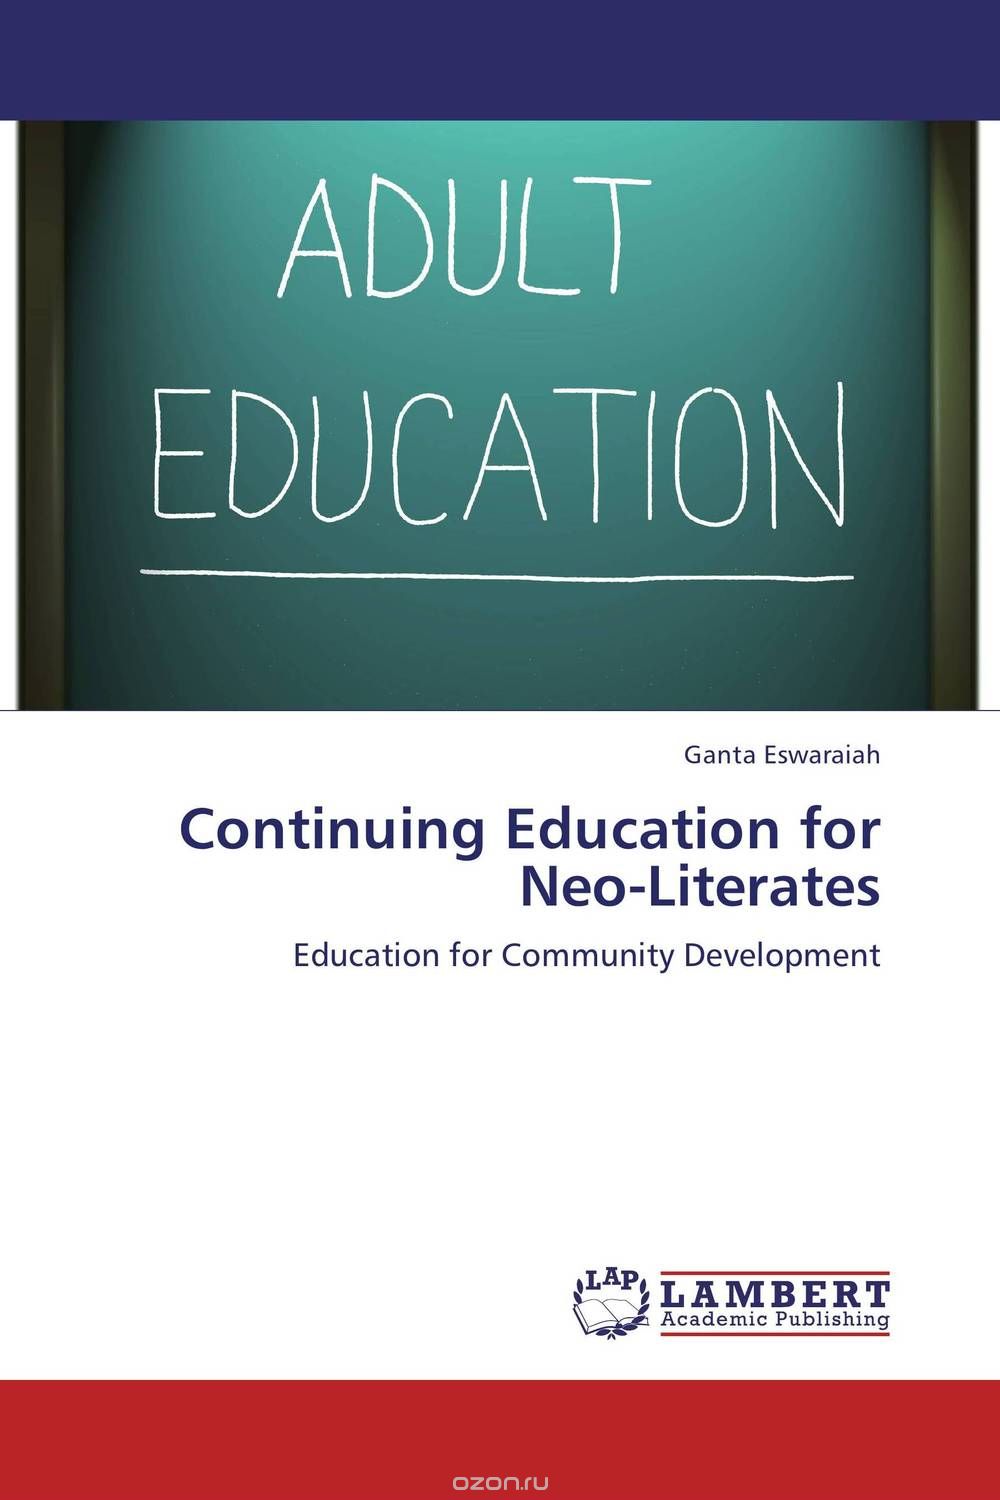 Скачать книгу "Continuing Education for Neo-Literates"